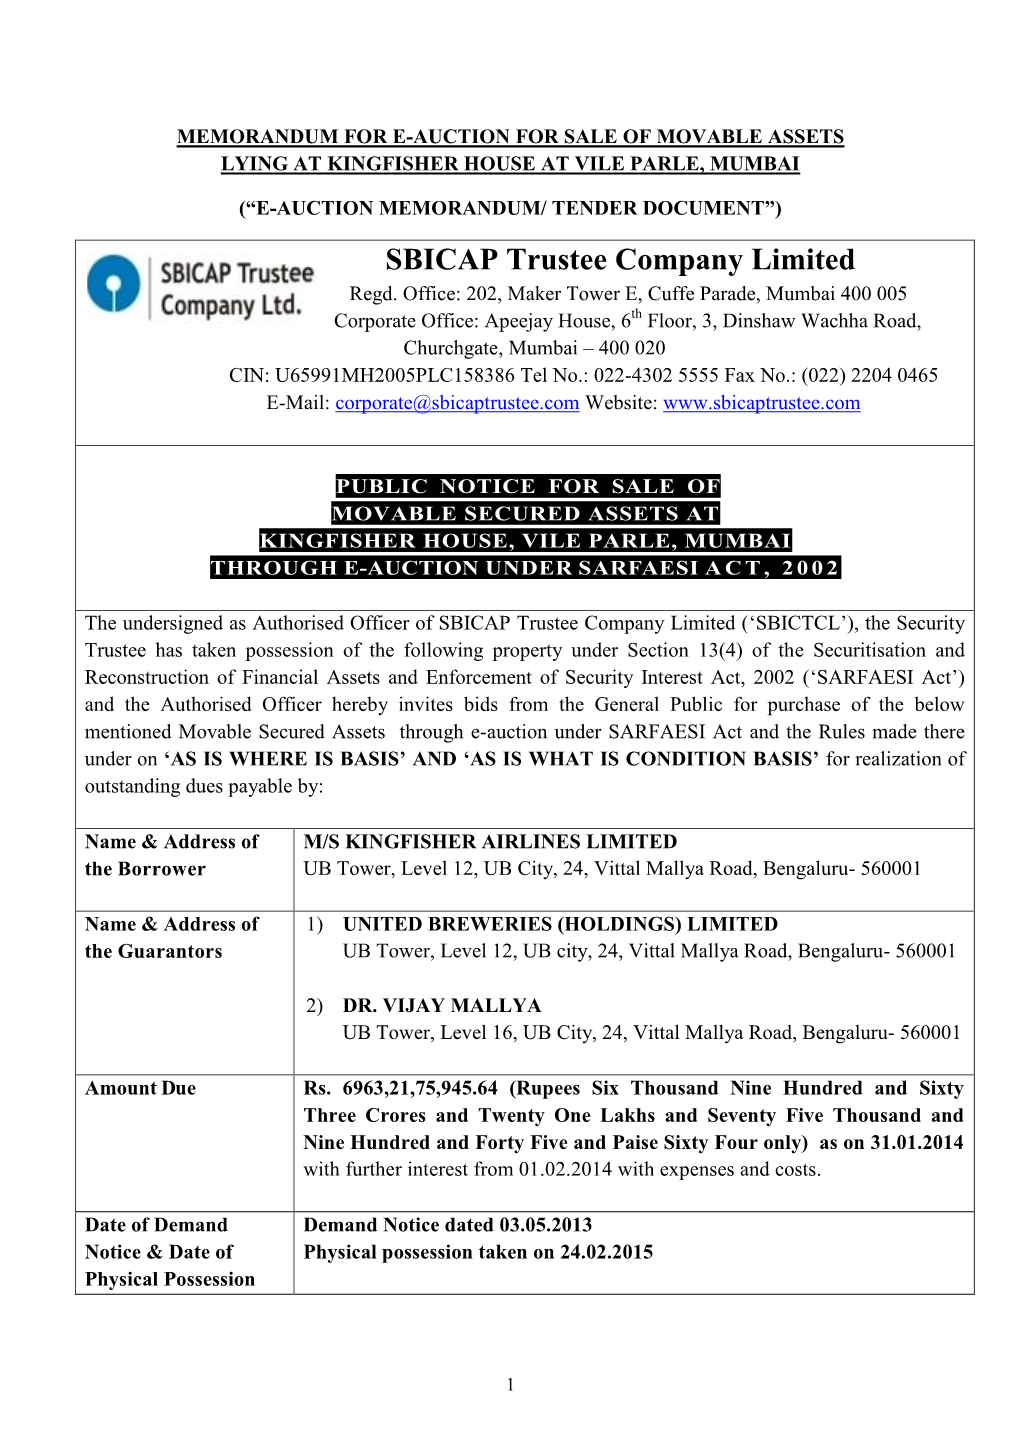 SBICAP Trustee Company Limited Regd